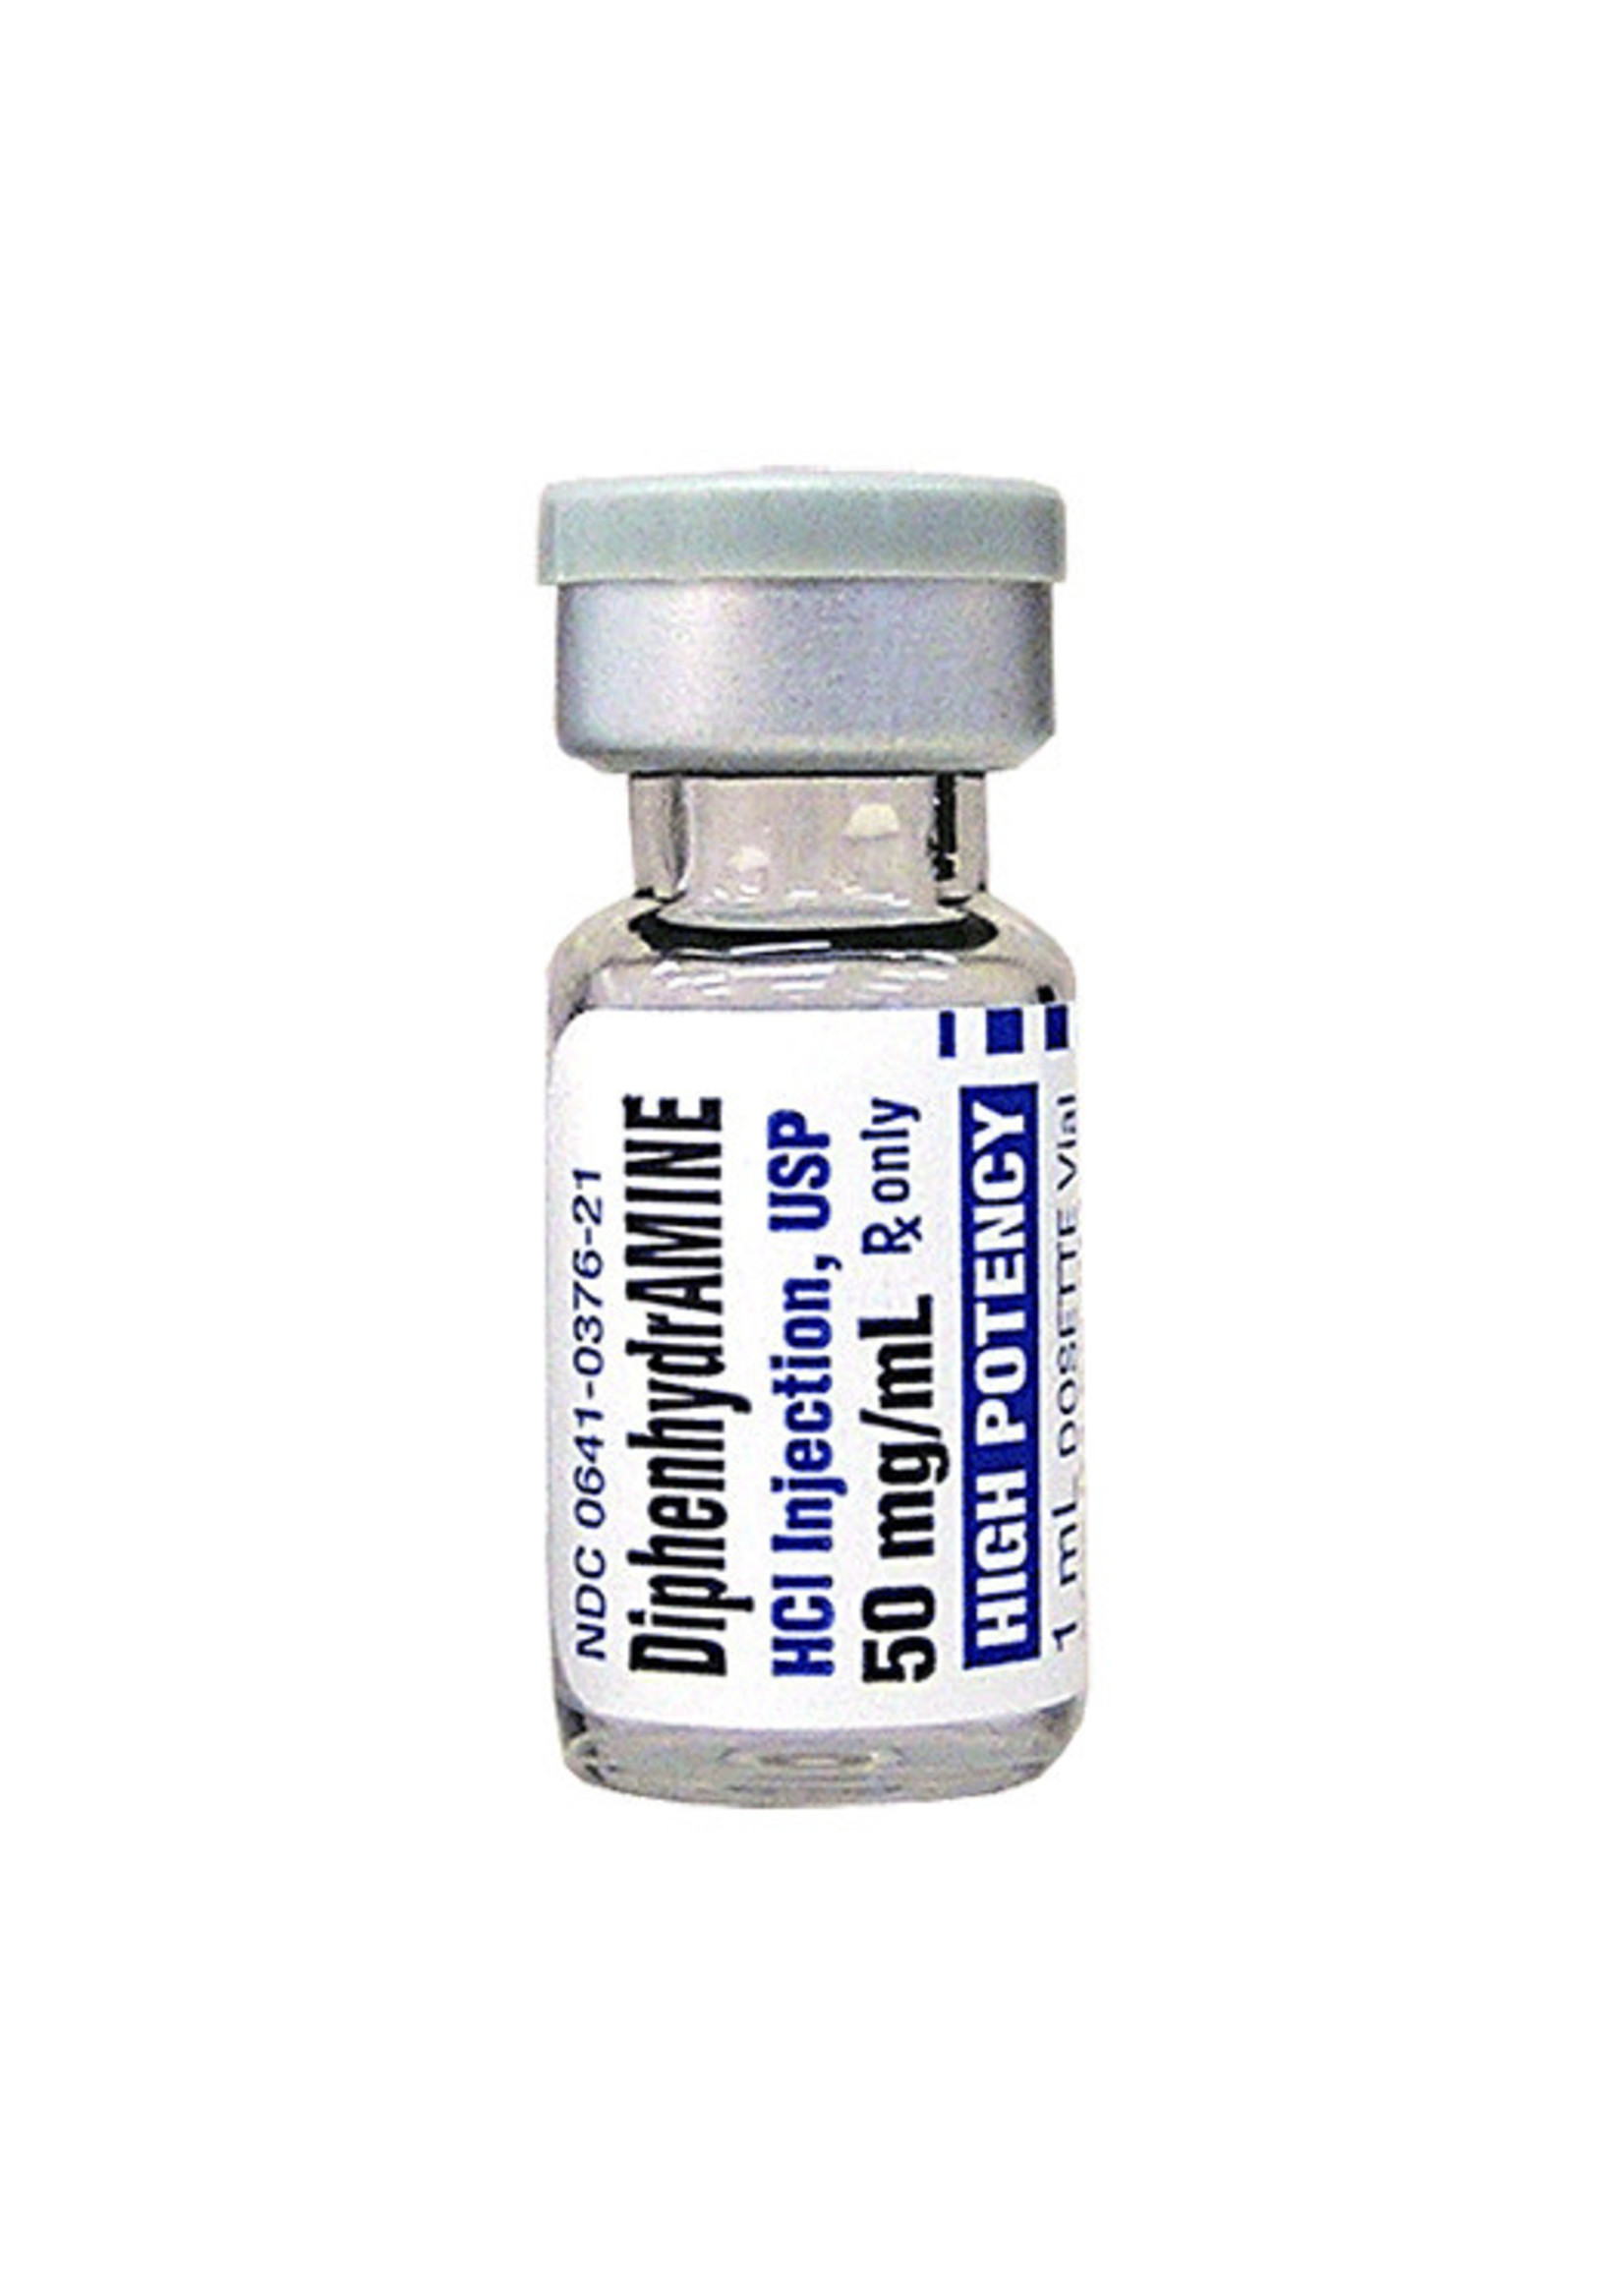 Benadryl 50Mg/1mL (Diphenhydramine)